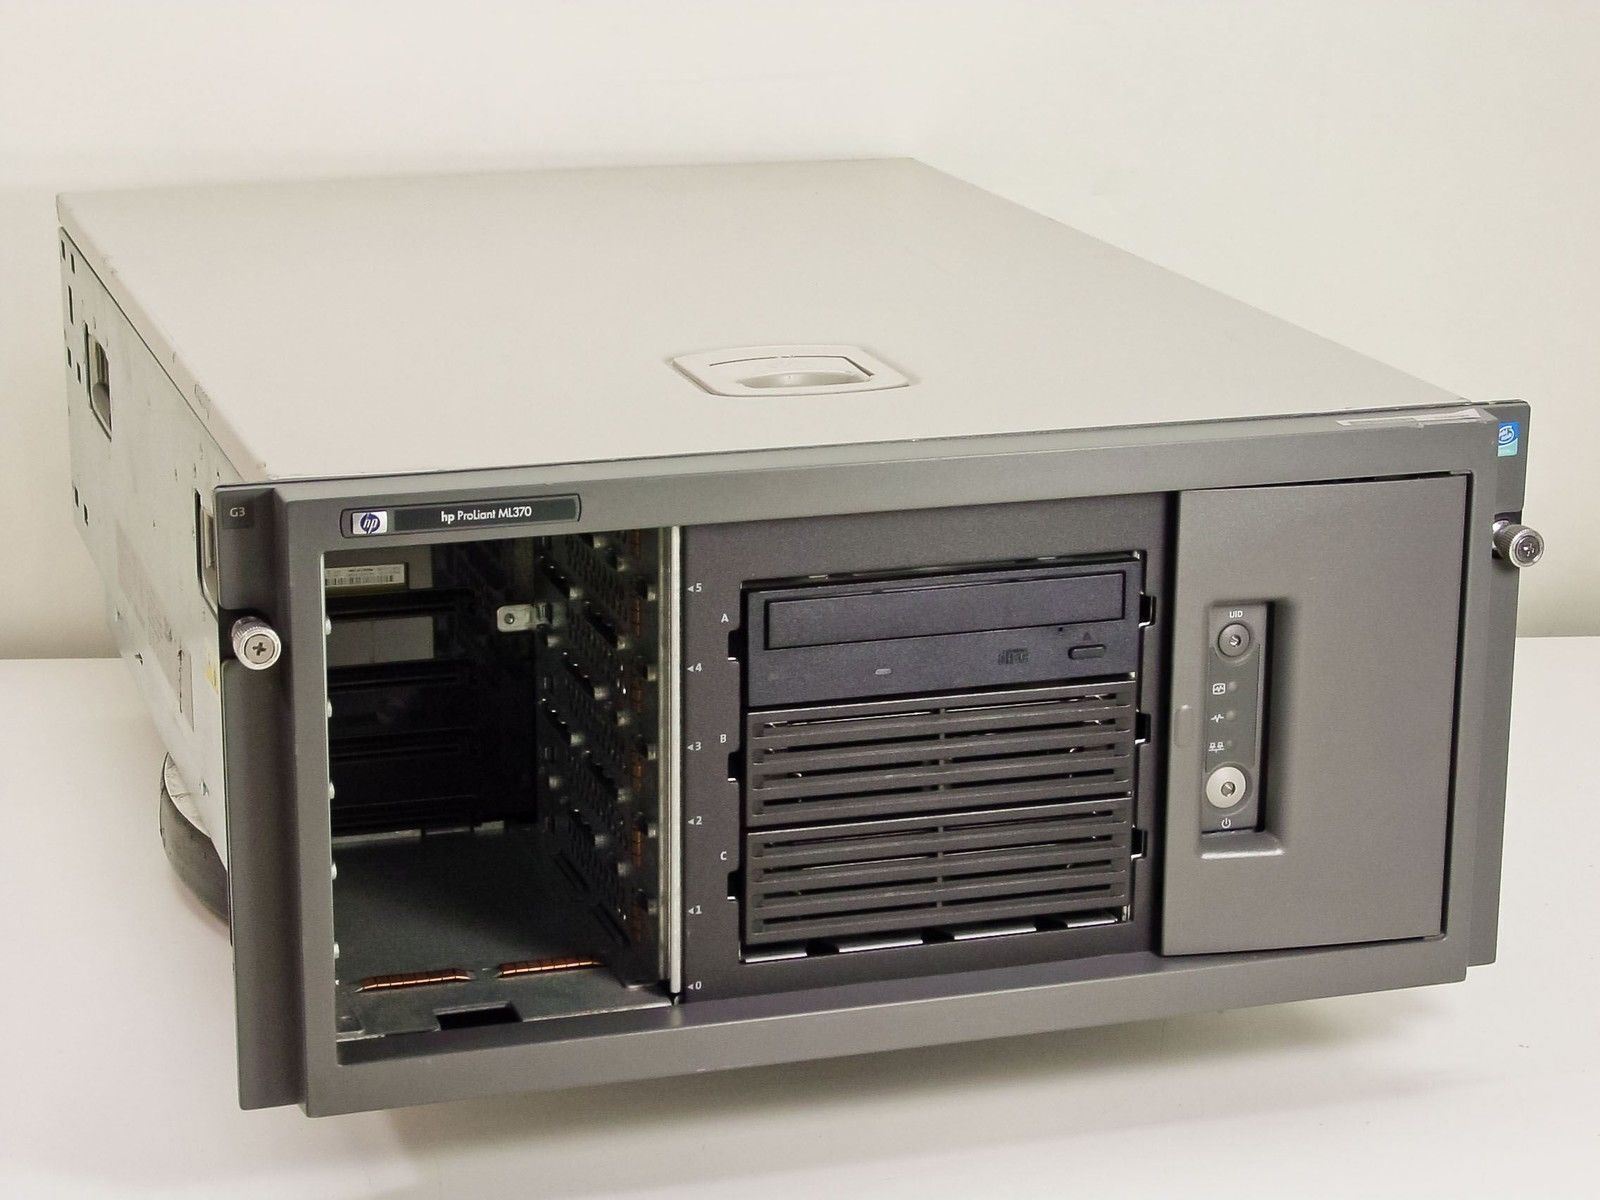 Compaq Proliant ML370 Server G3 3.08GHz Xeon - AS IS